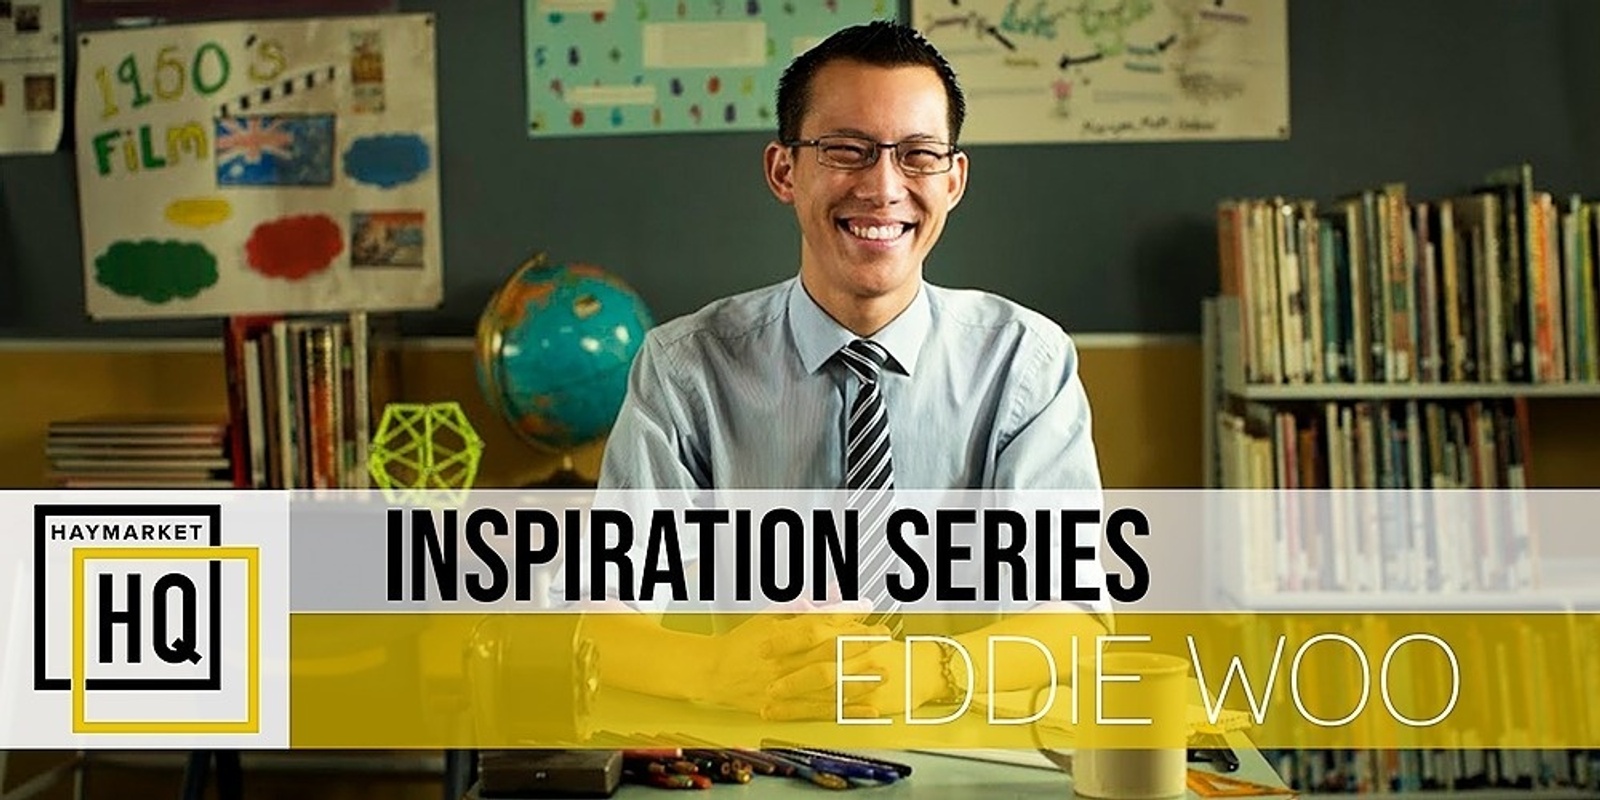 Banner image for Haymarket HQ Inspiration Series: The Wonderful World of Eddie Woo